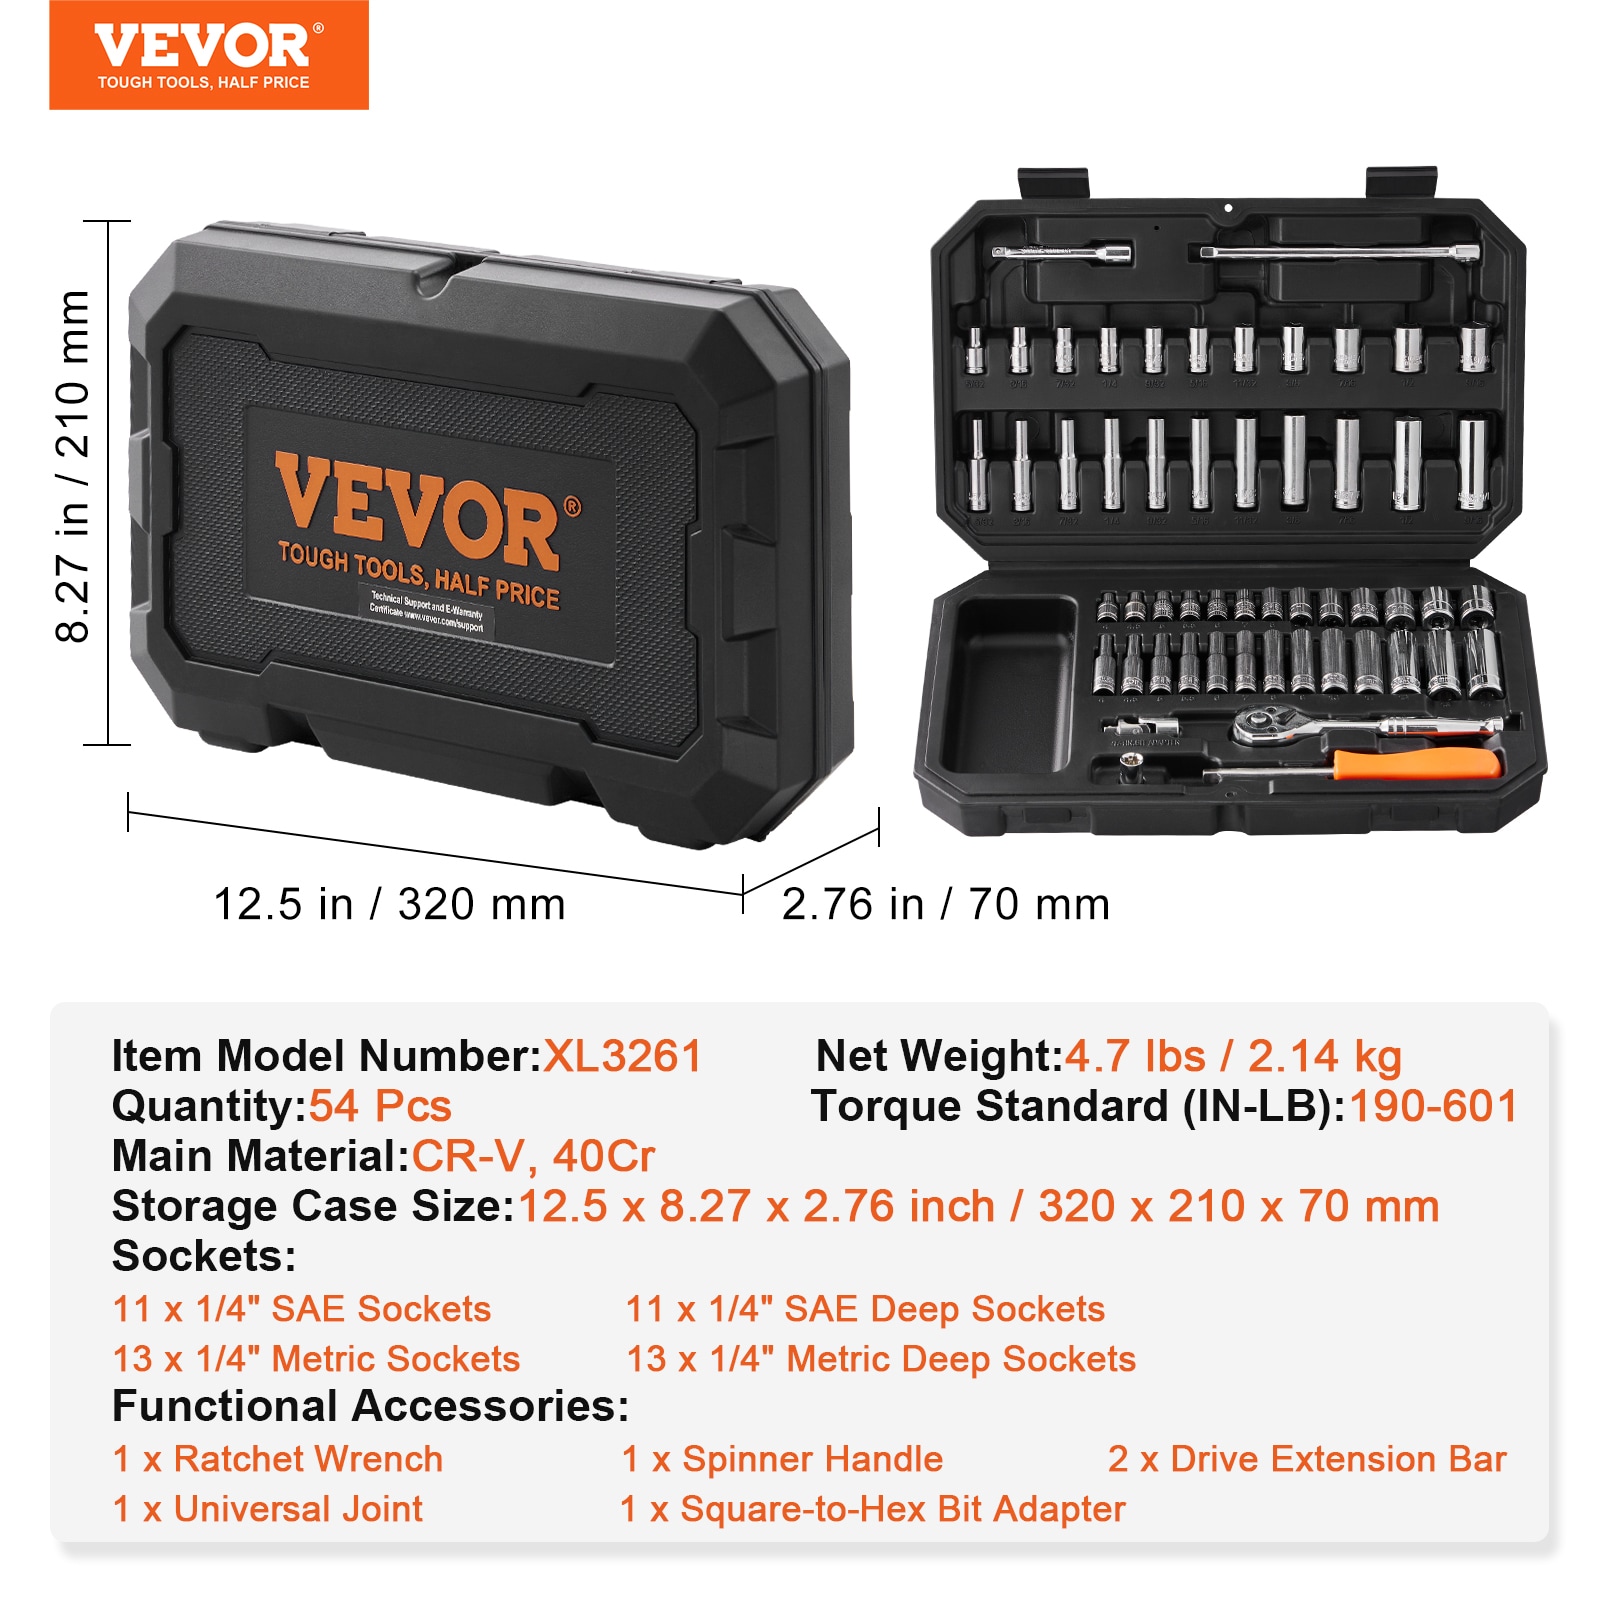 VEVOR 54-Piece Metric Powder-coated Mechanics Tool Set in the